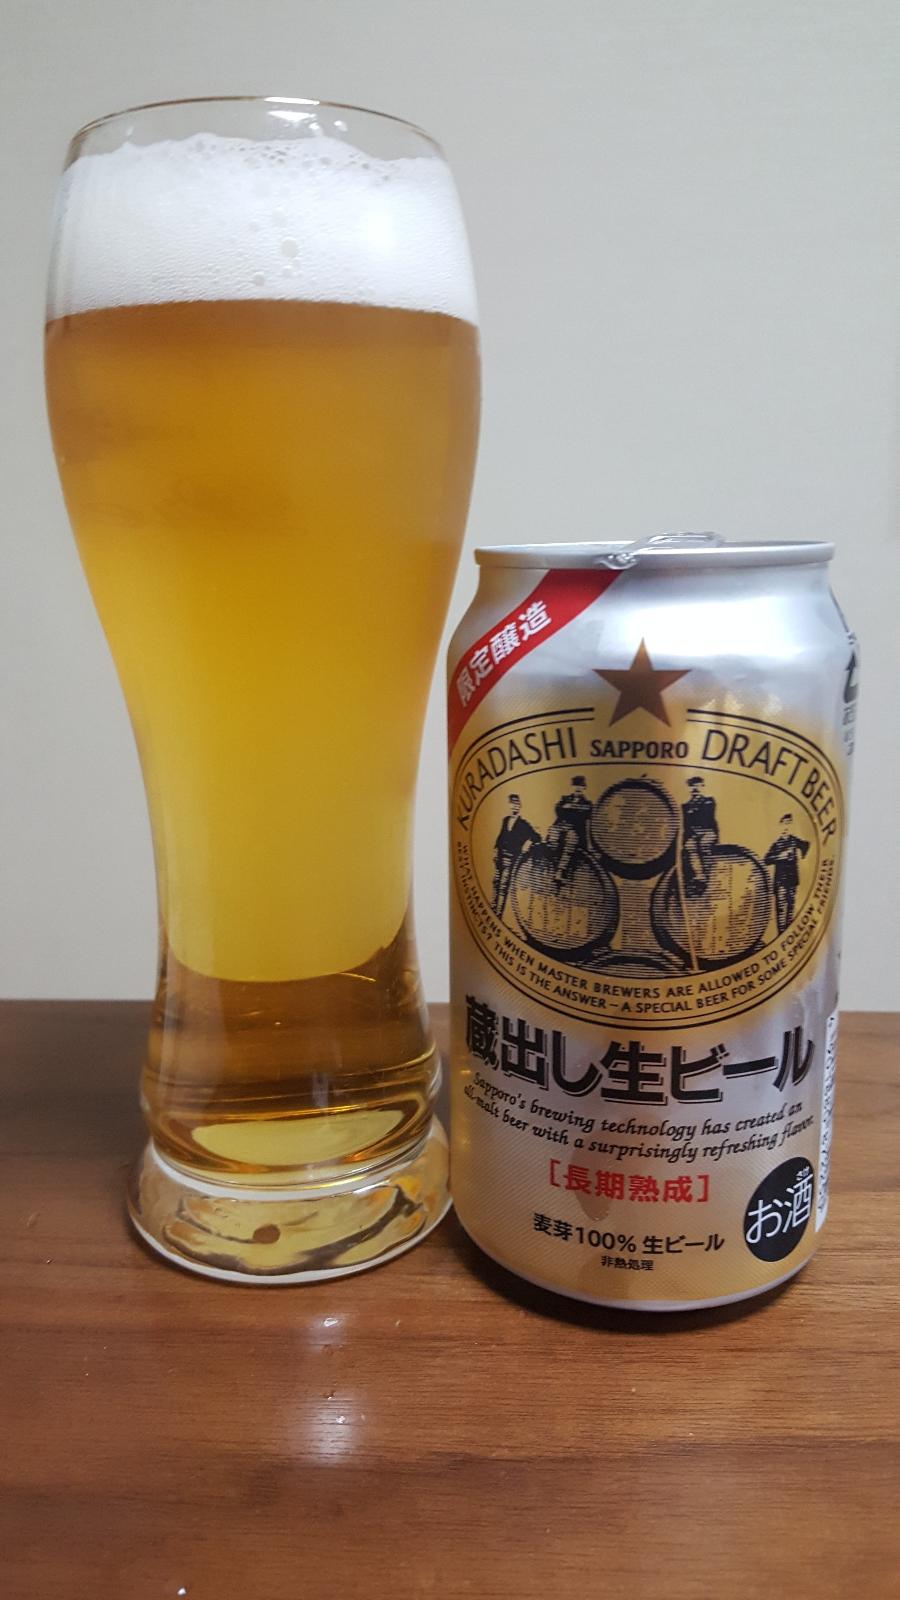 Kuradashi Draft Beer